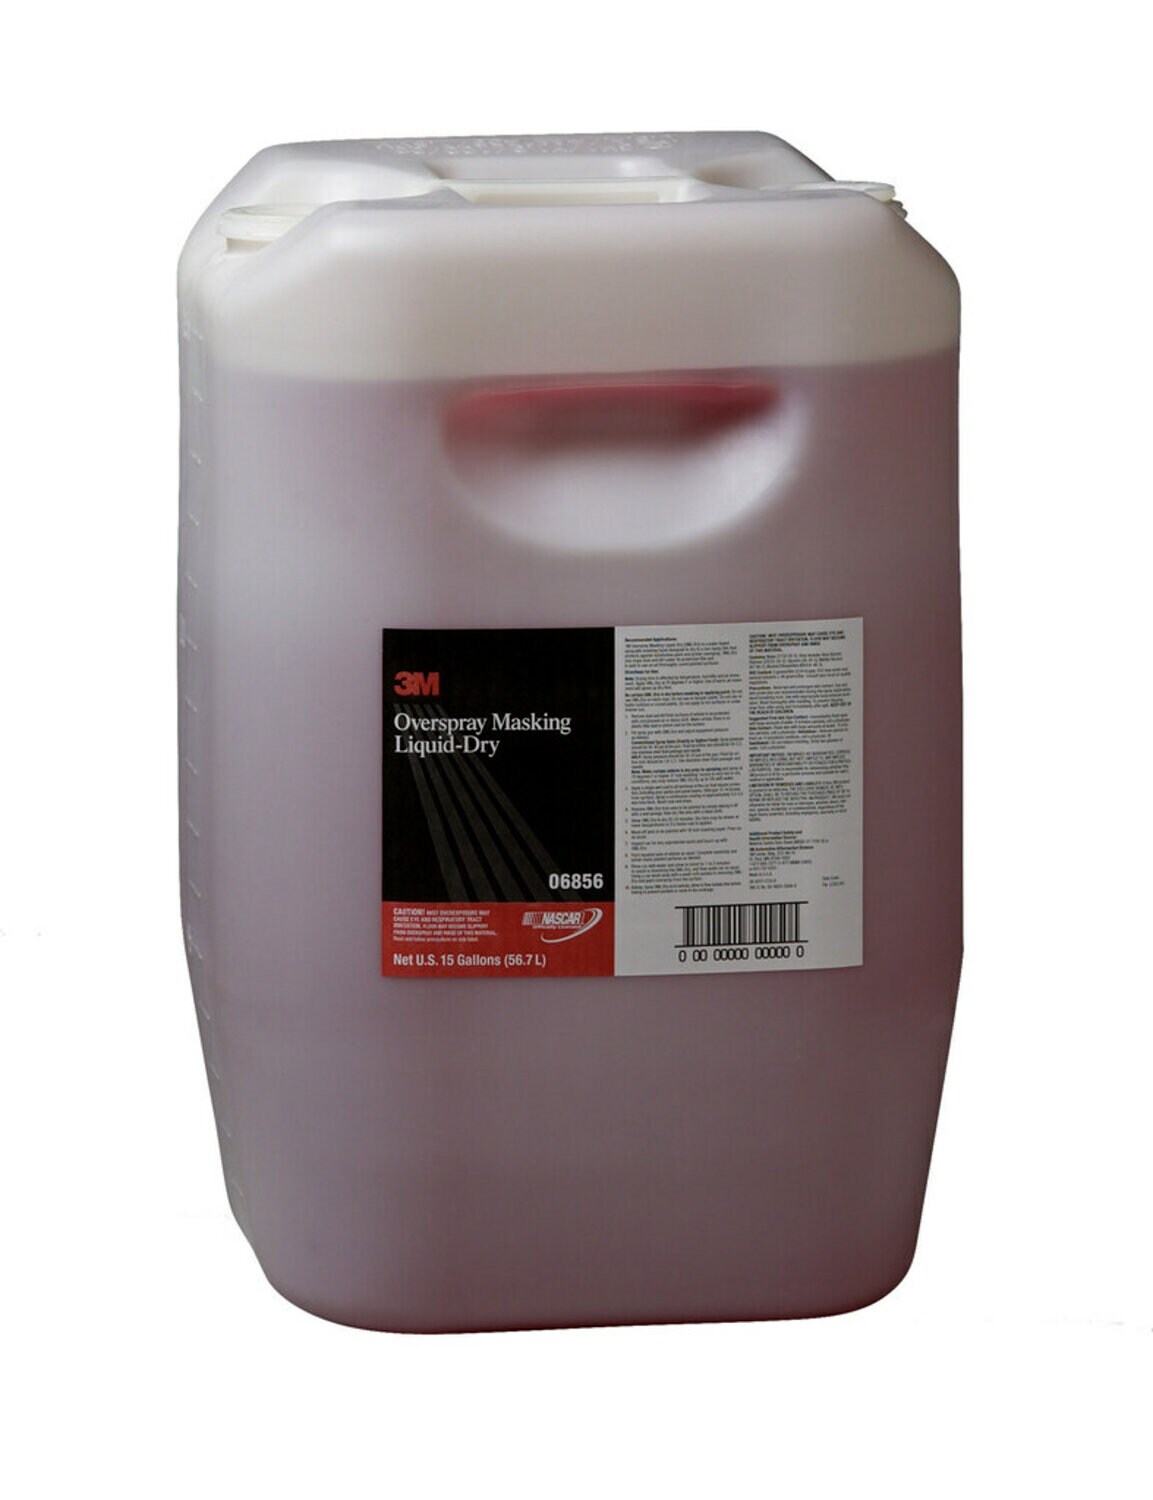 7100136757 - 3M Overspray Masking Liquid Dry, 06856, 15 Gallon, 1 per case